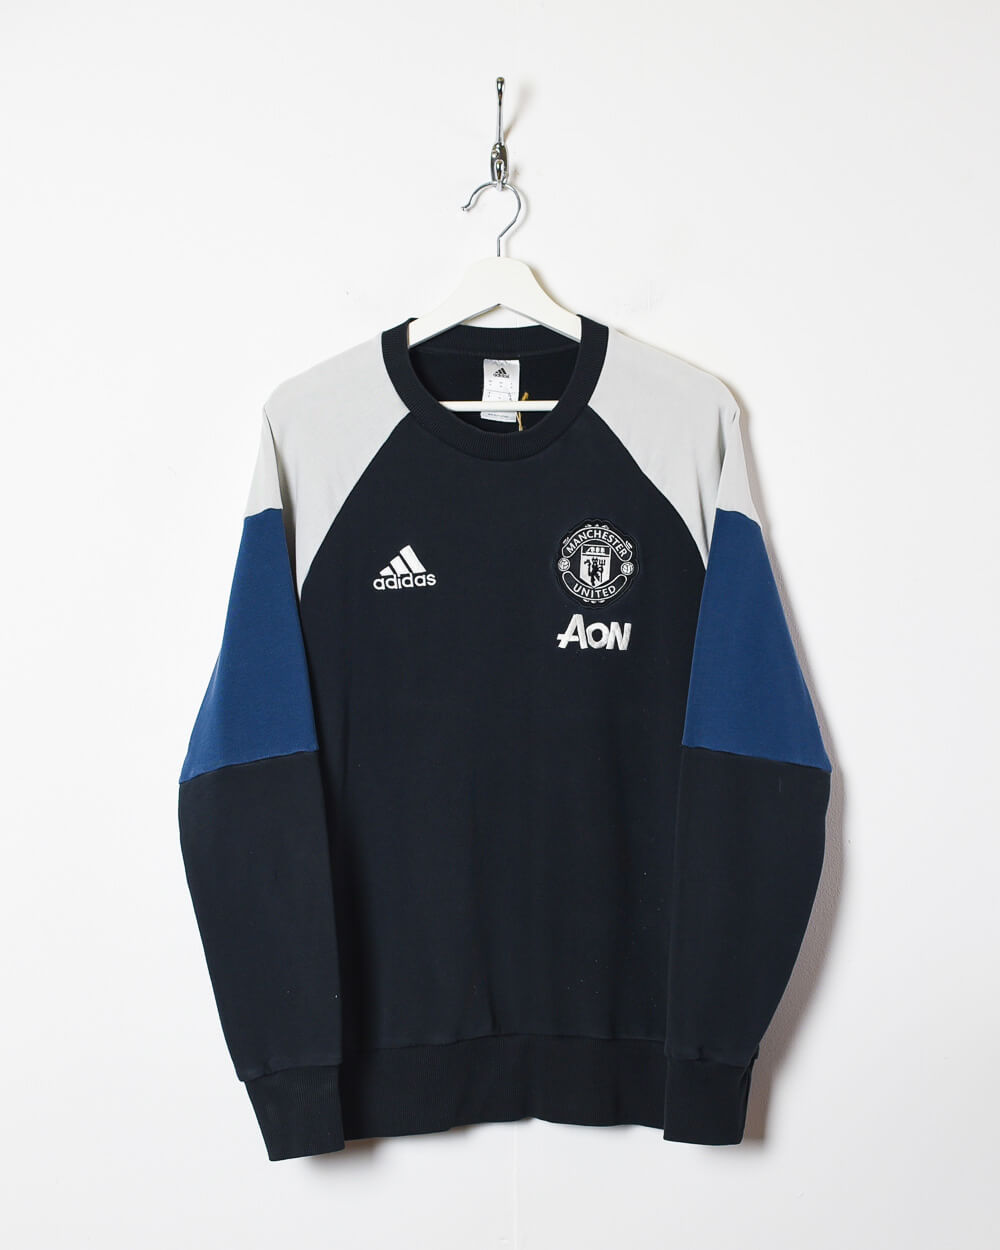 Black Adidas 2016/17 Manchester United Training Sweatshirt - Small